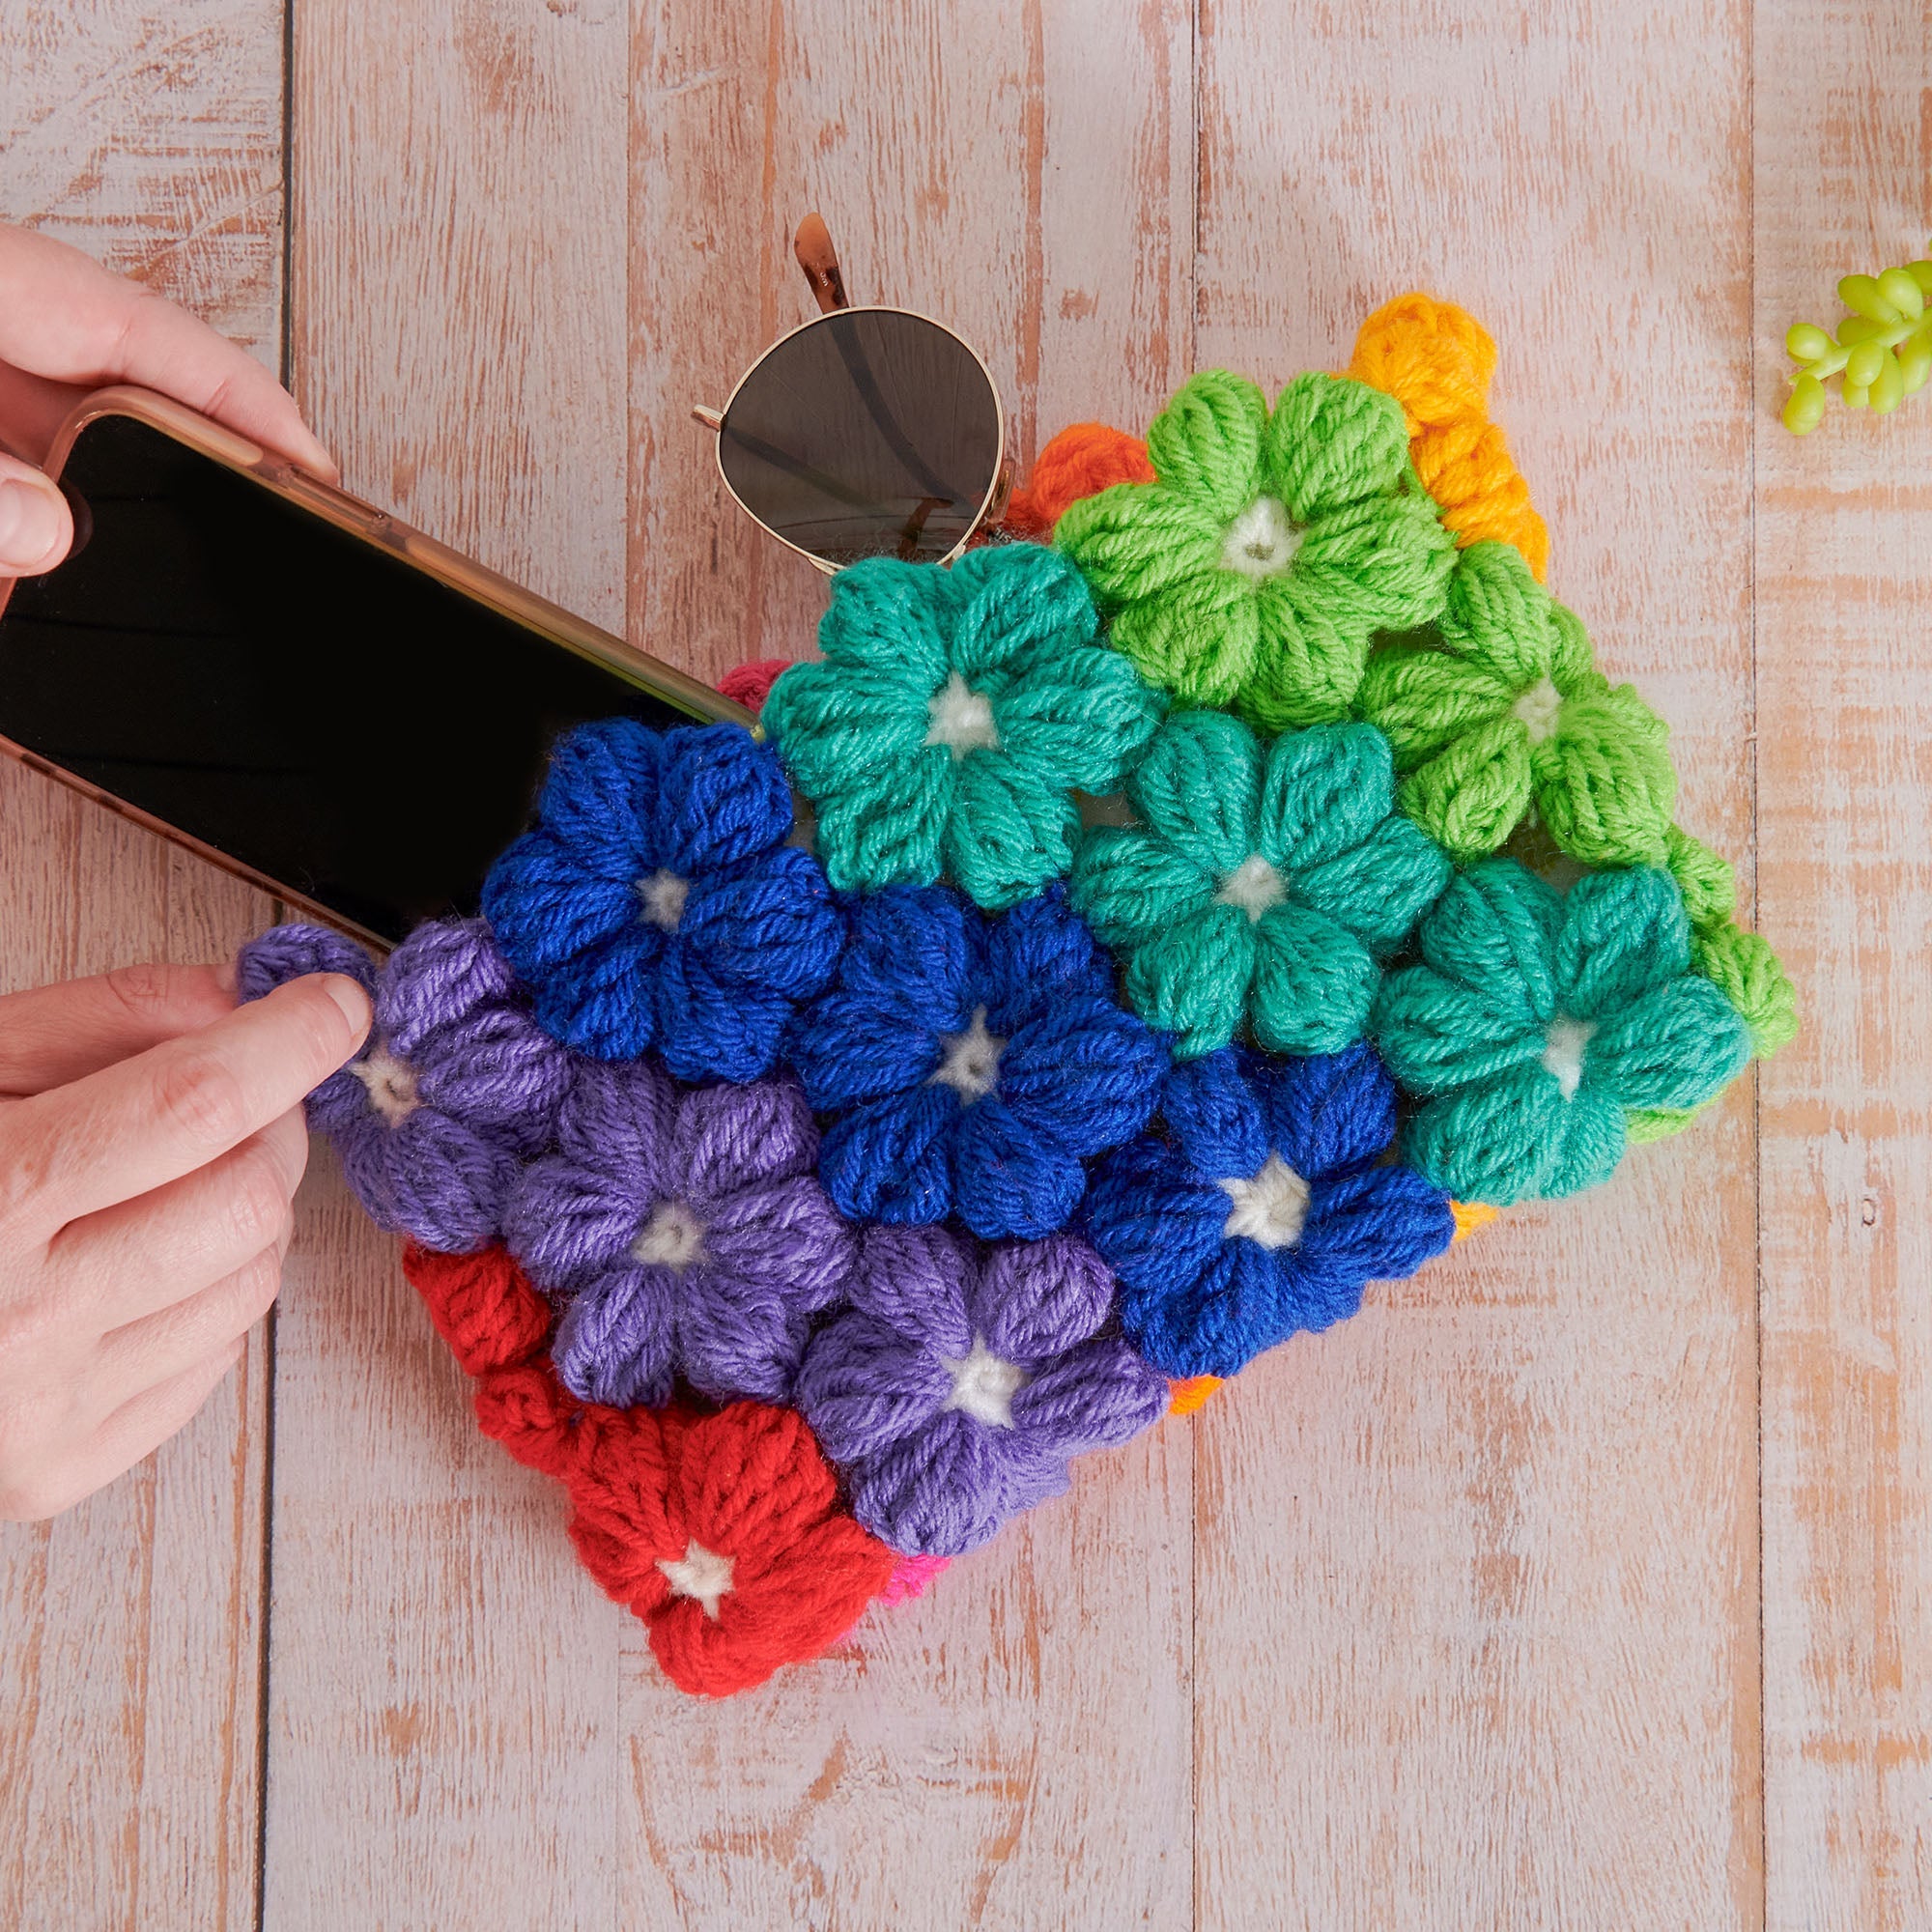 Boho Summer Lace Shoulder Bag Hand Crochet Crochet Flower Bag Woven  Handbags | eBay